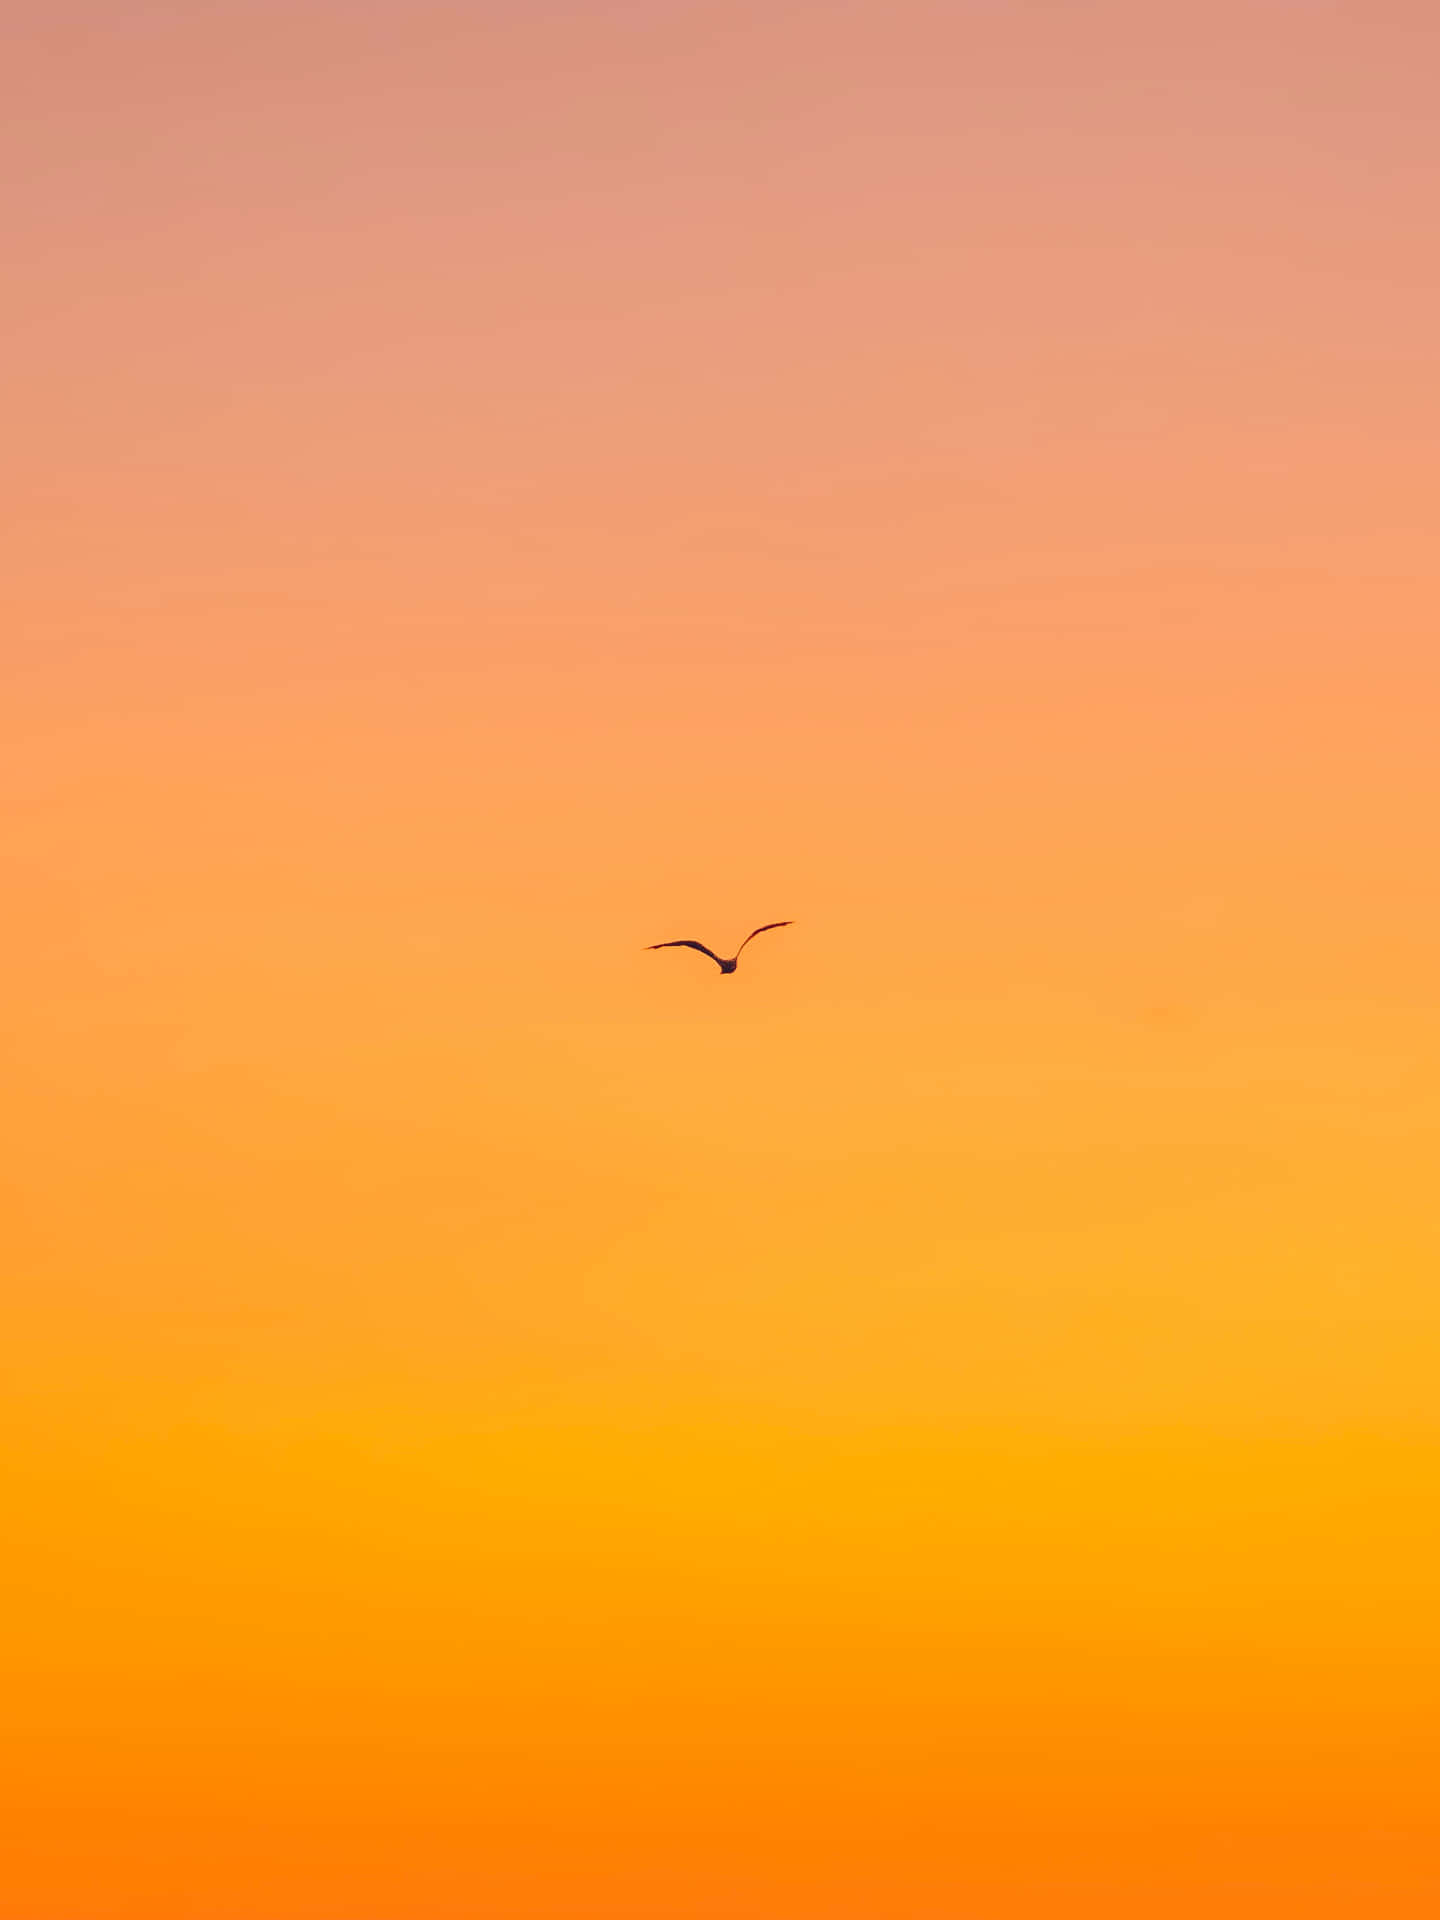 Sky View In Color Orange iPhone Wallpaper